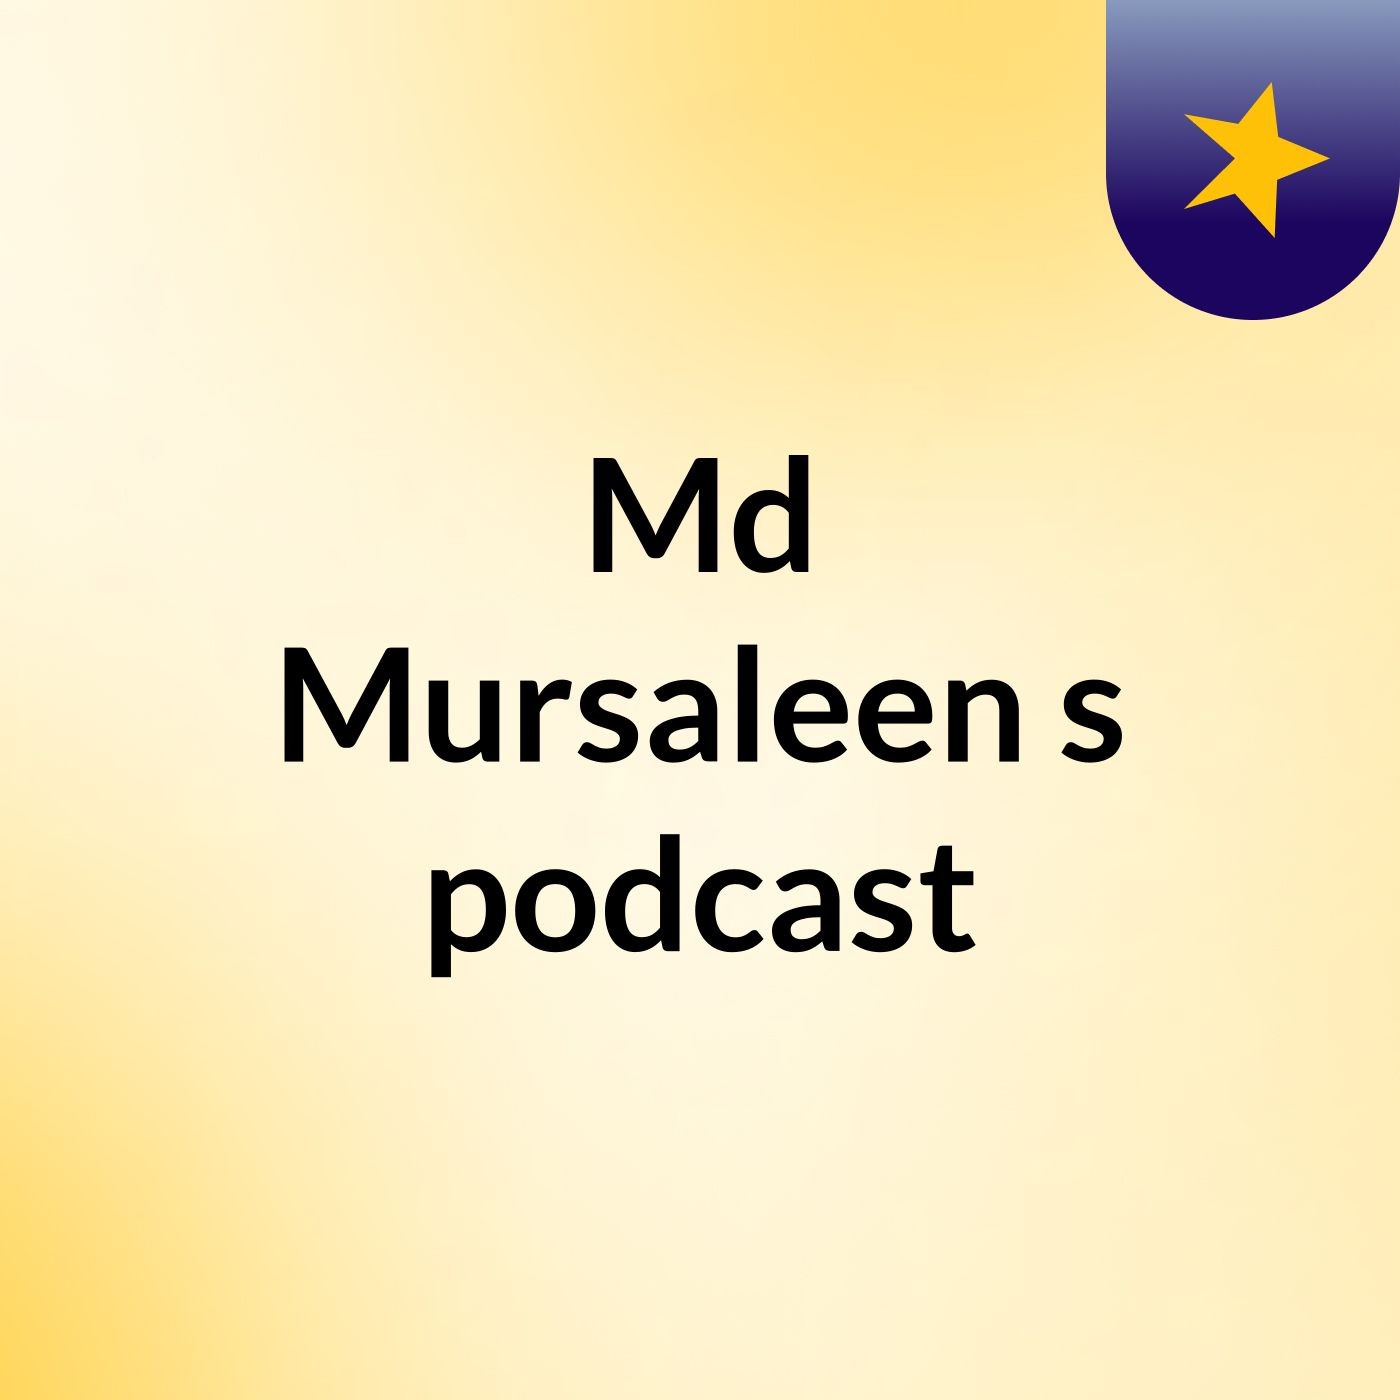 Jaante Ho Episode 4 - Md Mursaleen's podcast